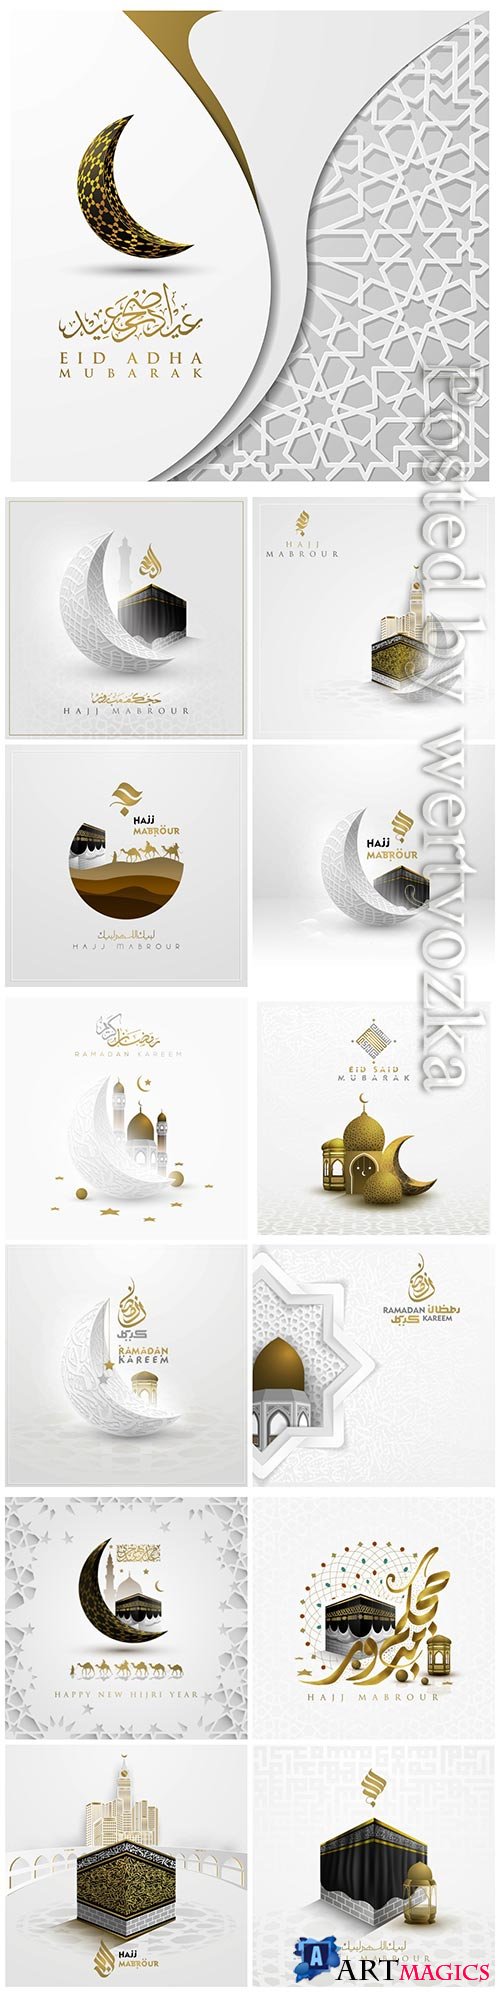 Hajj mabrour greeting islamic illustration background design with beautiful kaaba lentern